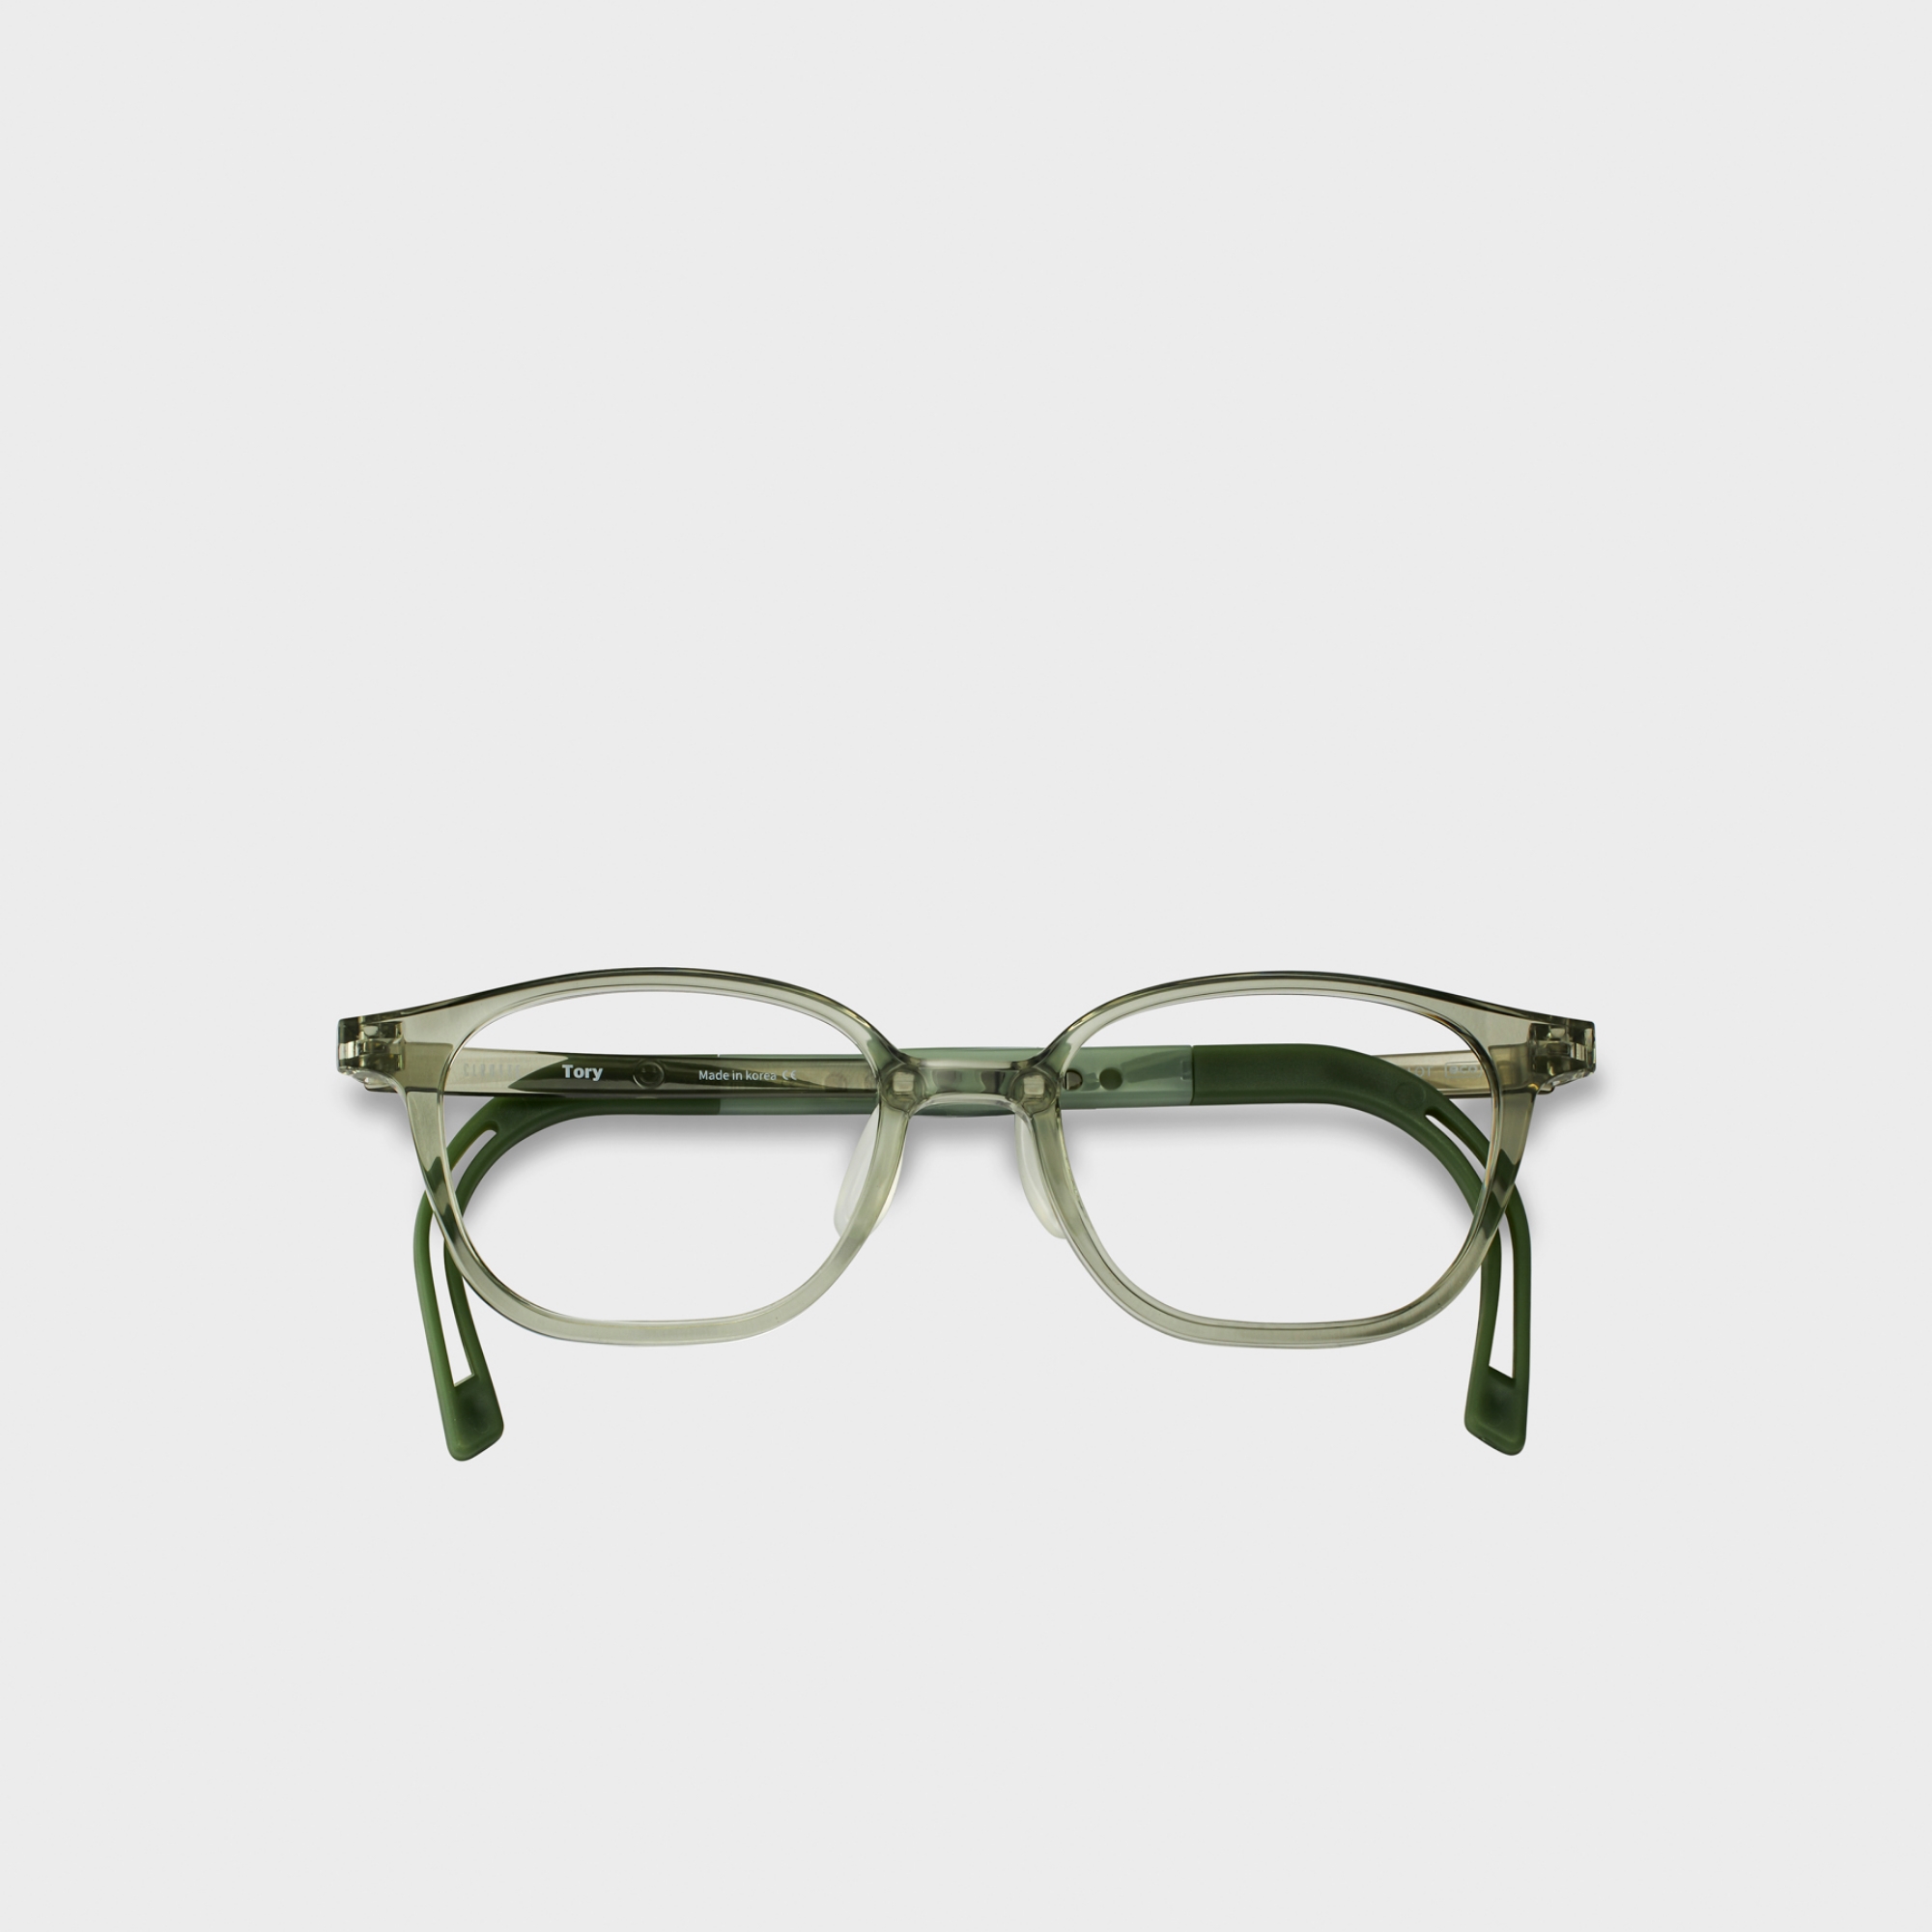 _CLROTTE_ Eyewear Glasses_ TORY